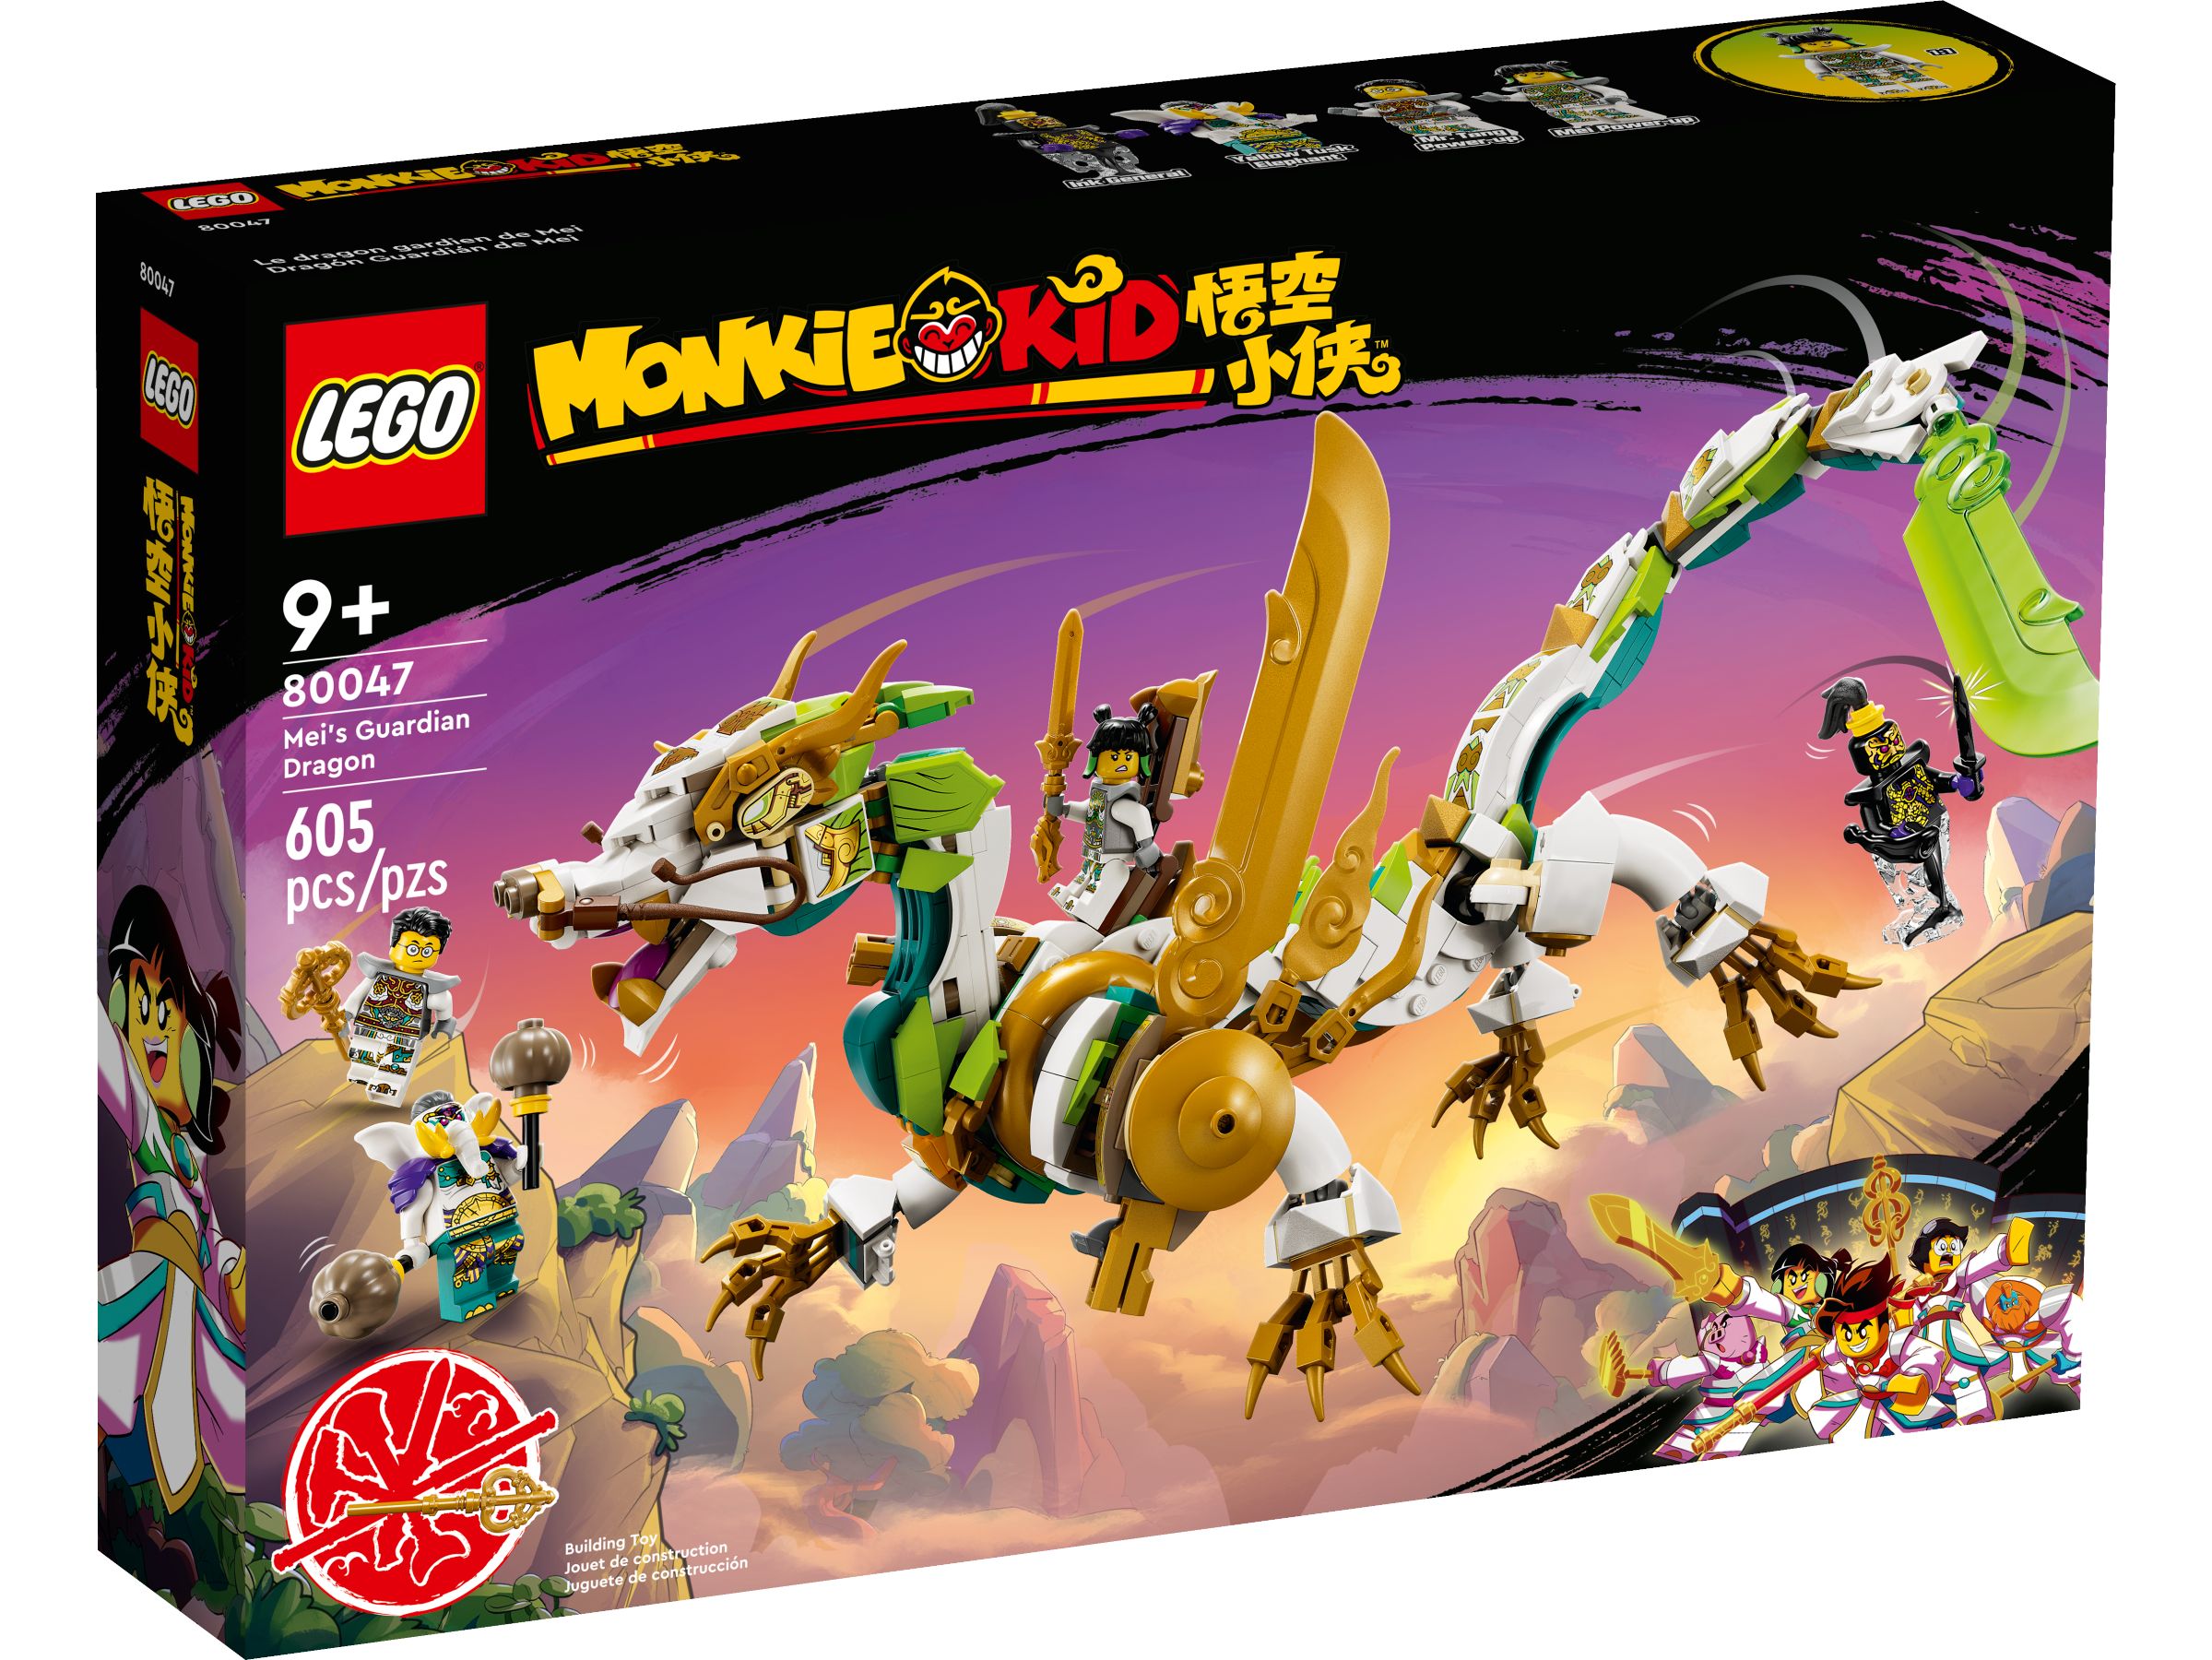 LEGO Monkie Kid 80047 Meis Schutzdrache LEGO_80047_alt1.jpg